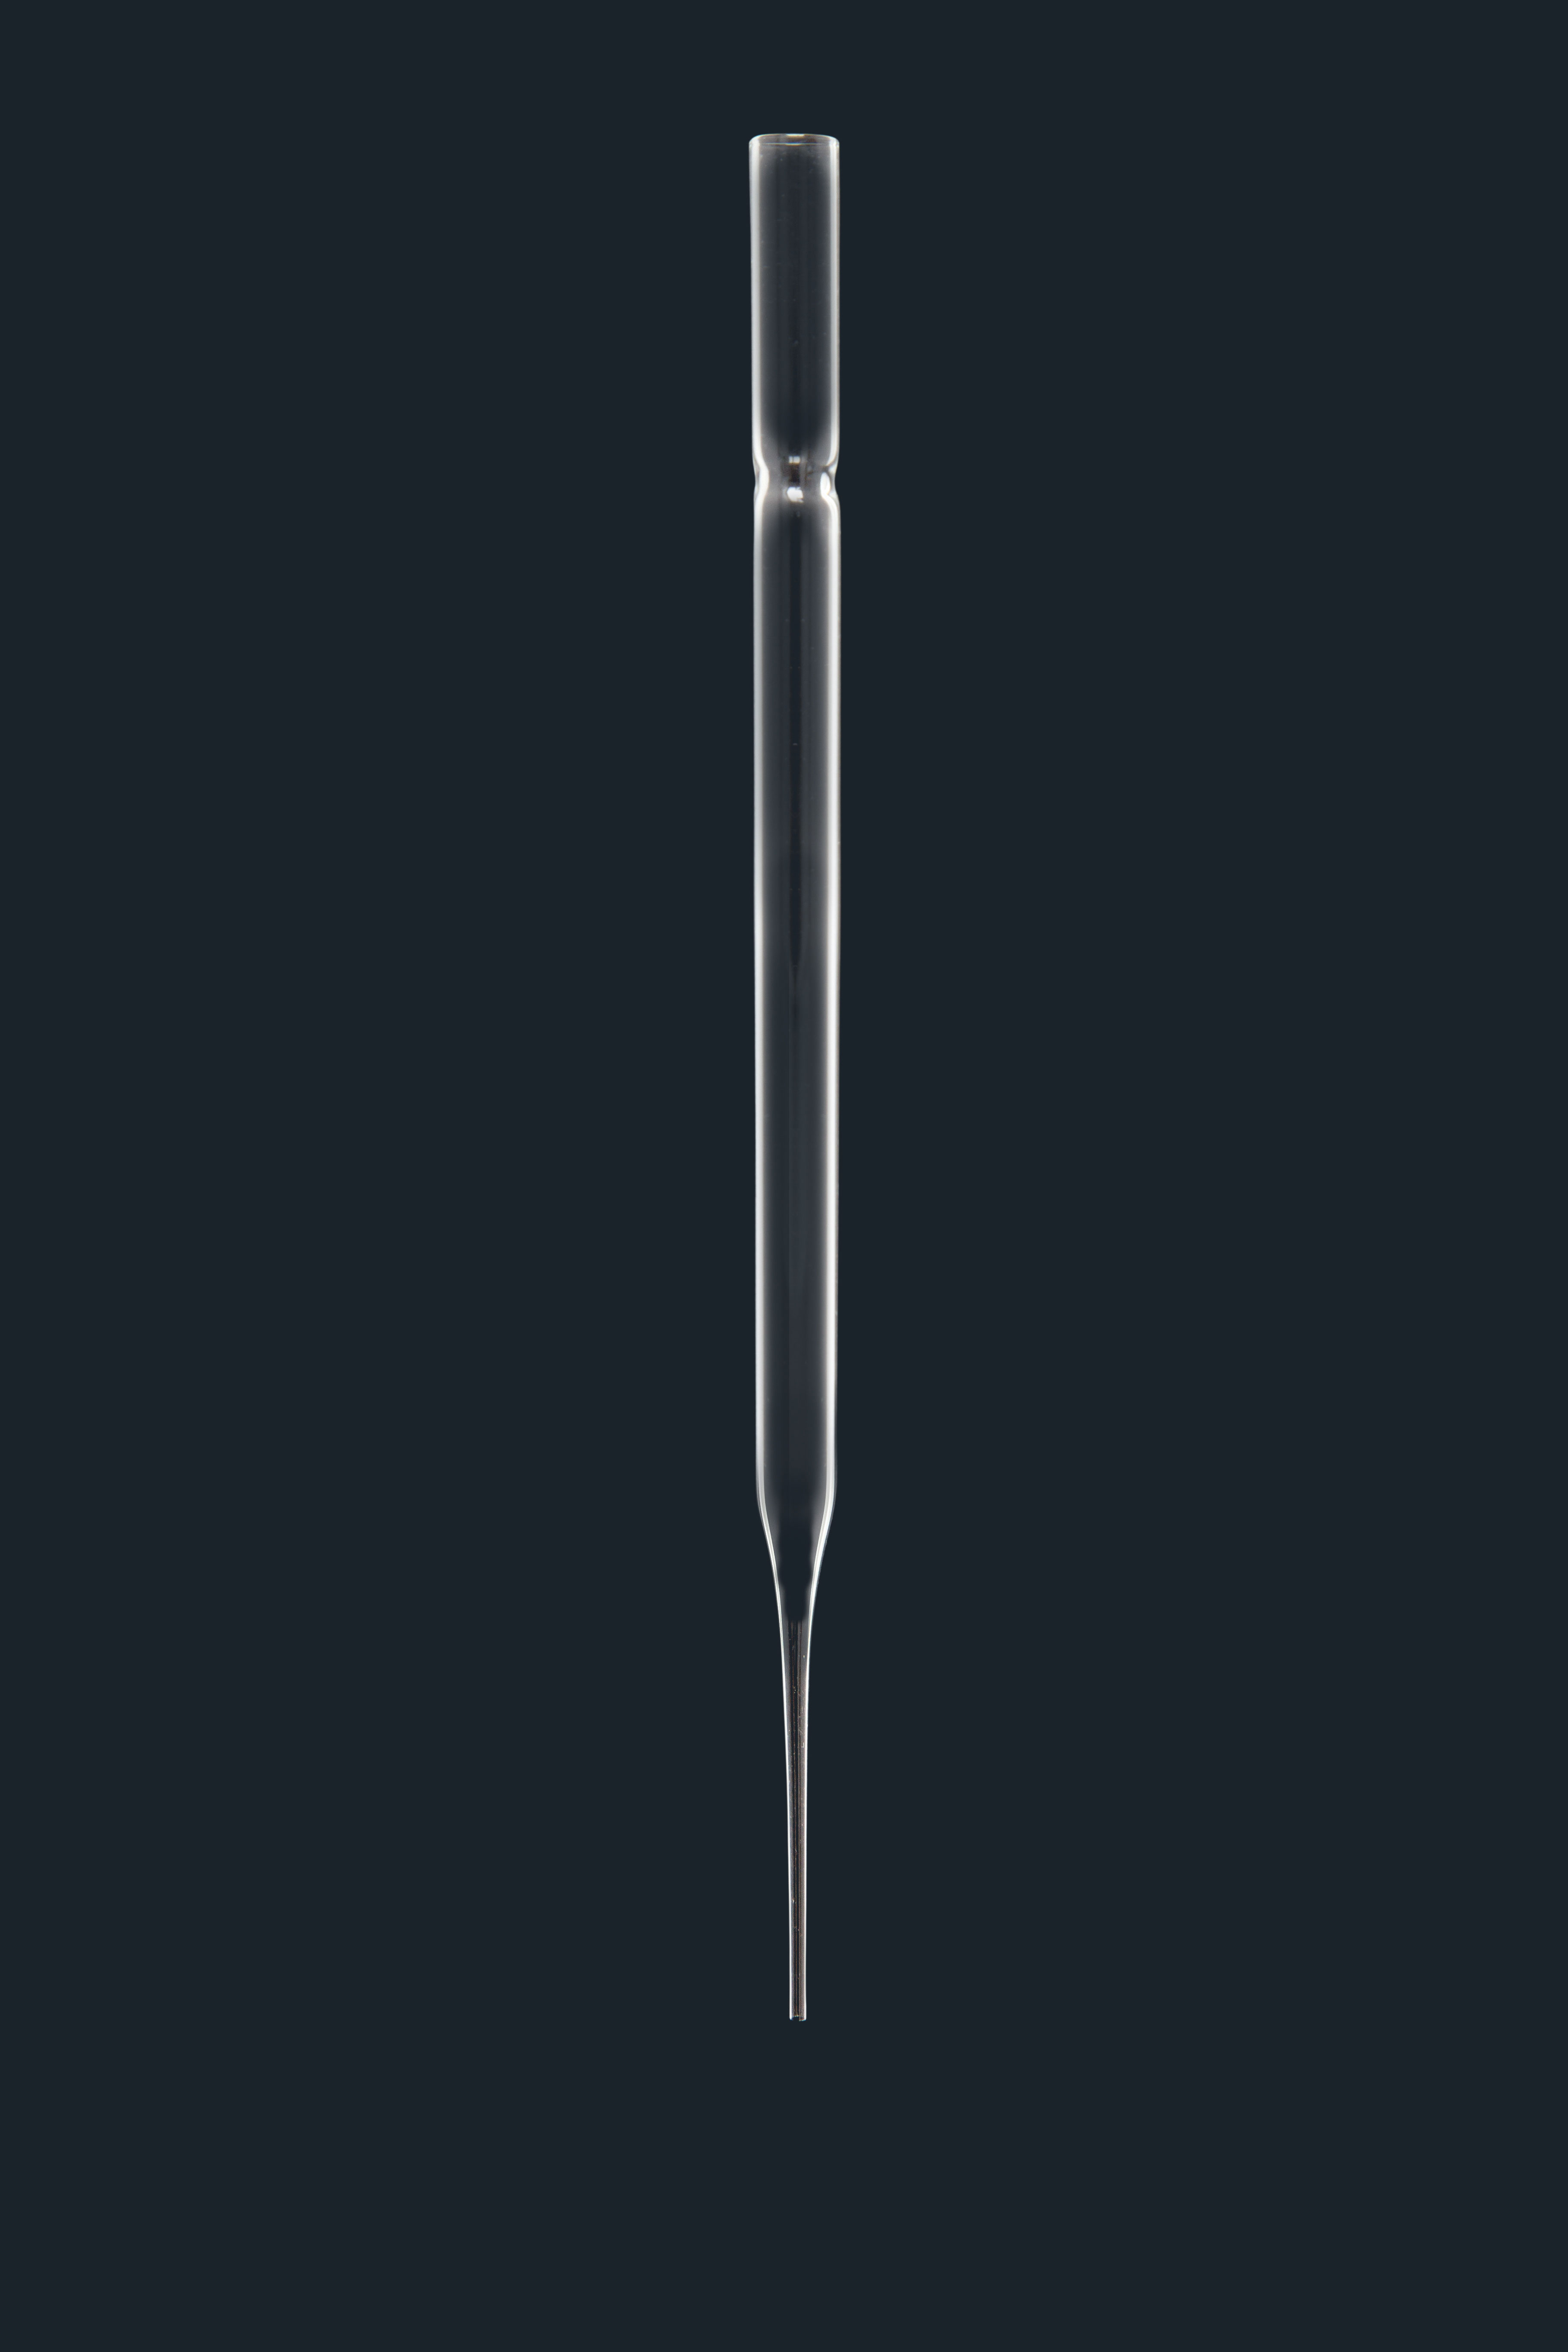 Pipeta Pasteur de vidrio Scharlau long. 220mm largas. Longitud de la punta 120 mm